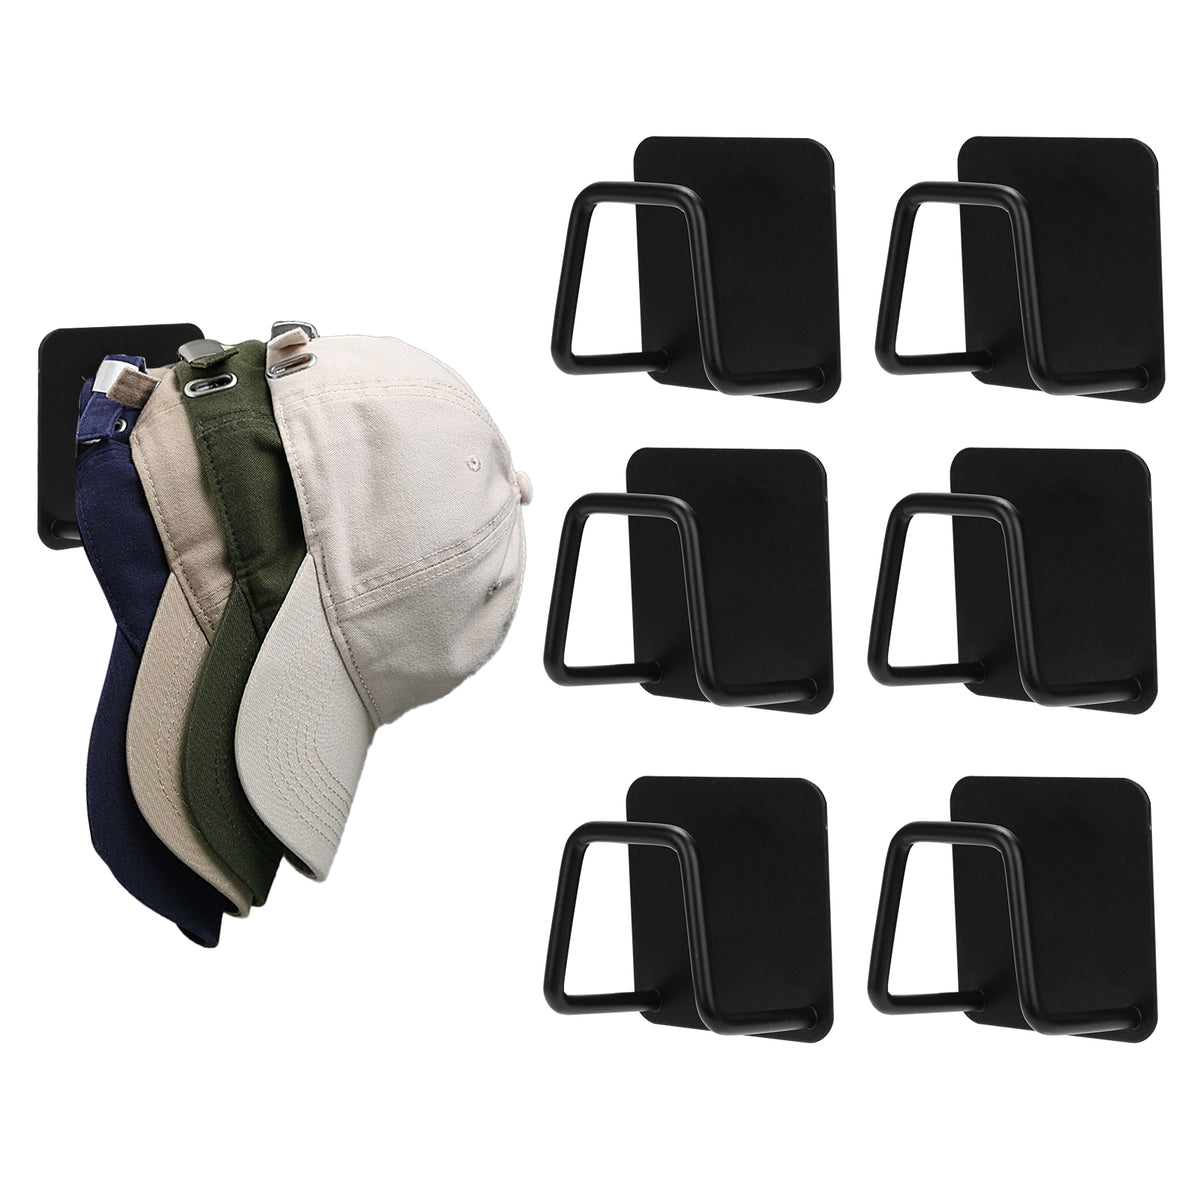 Adorila 6 Pack Hat Rack for Wall Hat Organizer, Metal Hat Holder for Baseball Caps, Adhesive Hat Hooks for Wall (Black)